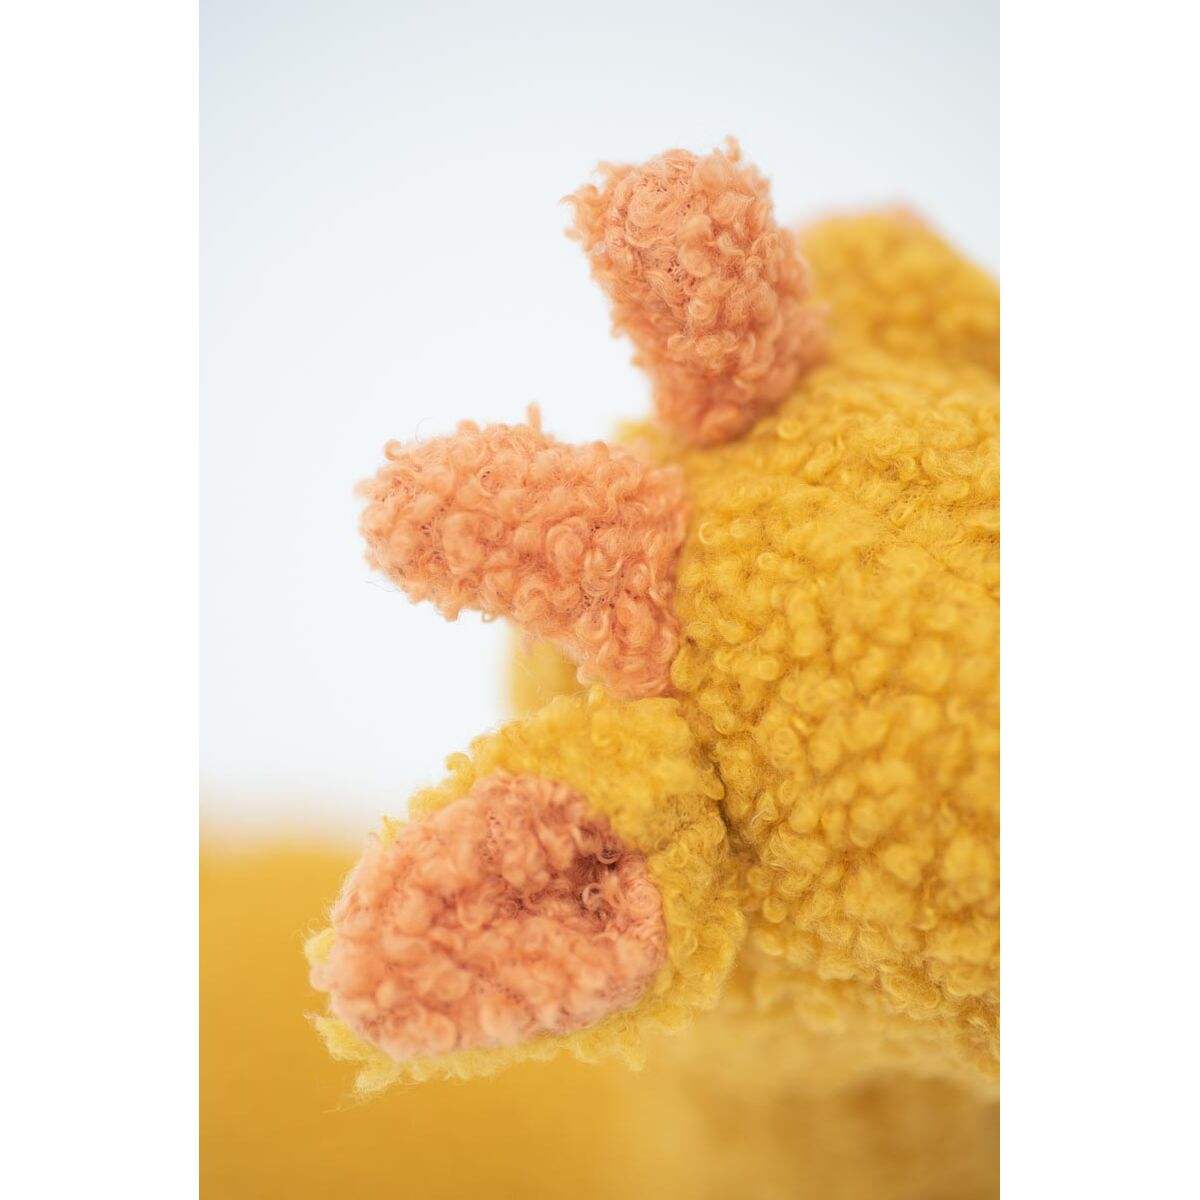 Peluche Crochetts Amarillo Dinosaurio Jirafa 30 x 24 x 10 cm 2 Piezas